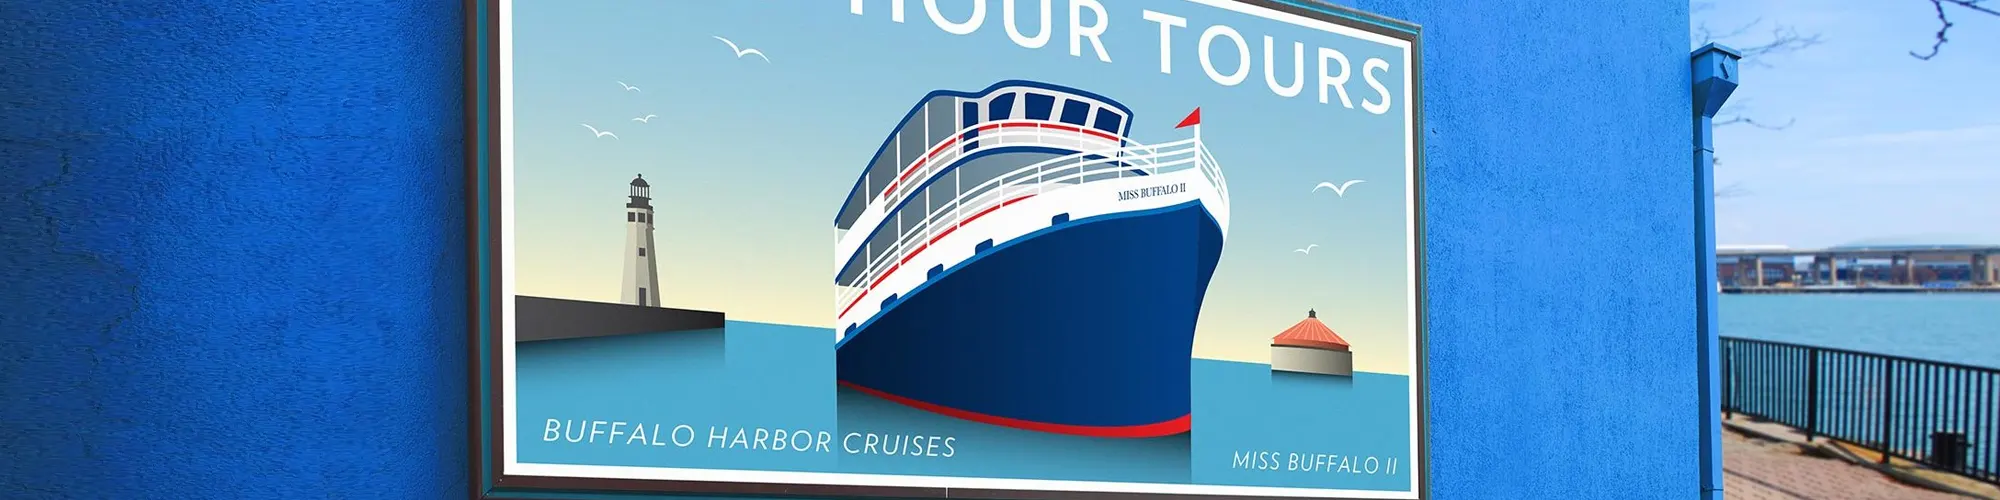 Buffalo Harbor Cruises Branding